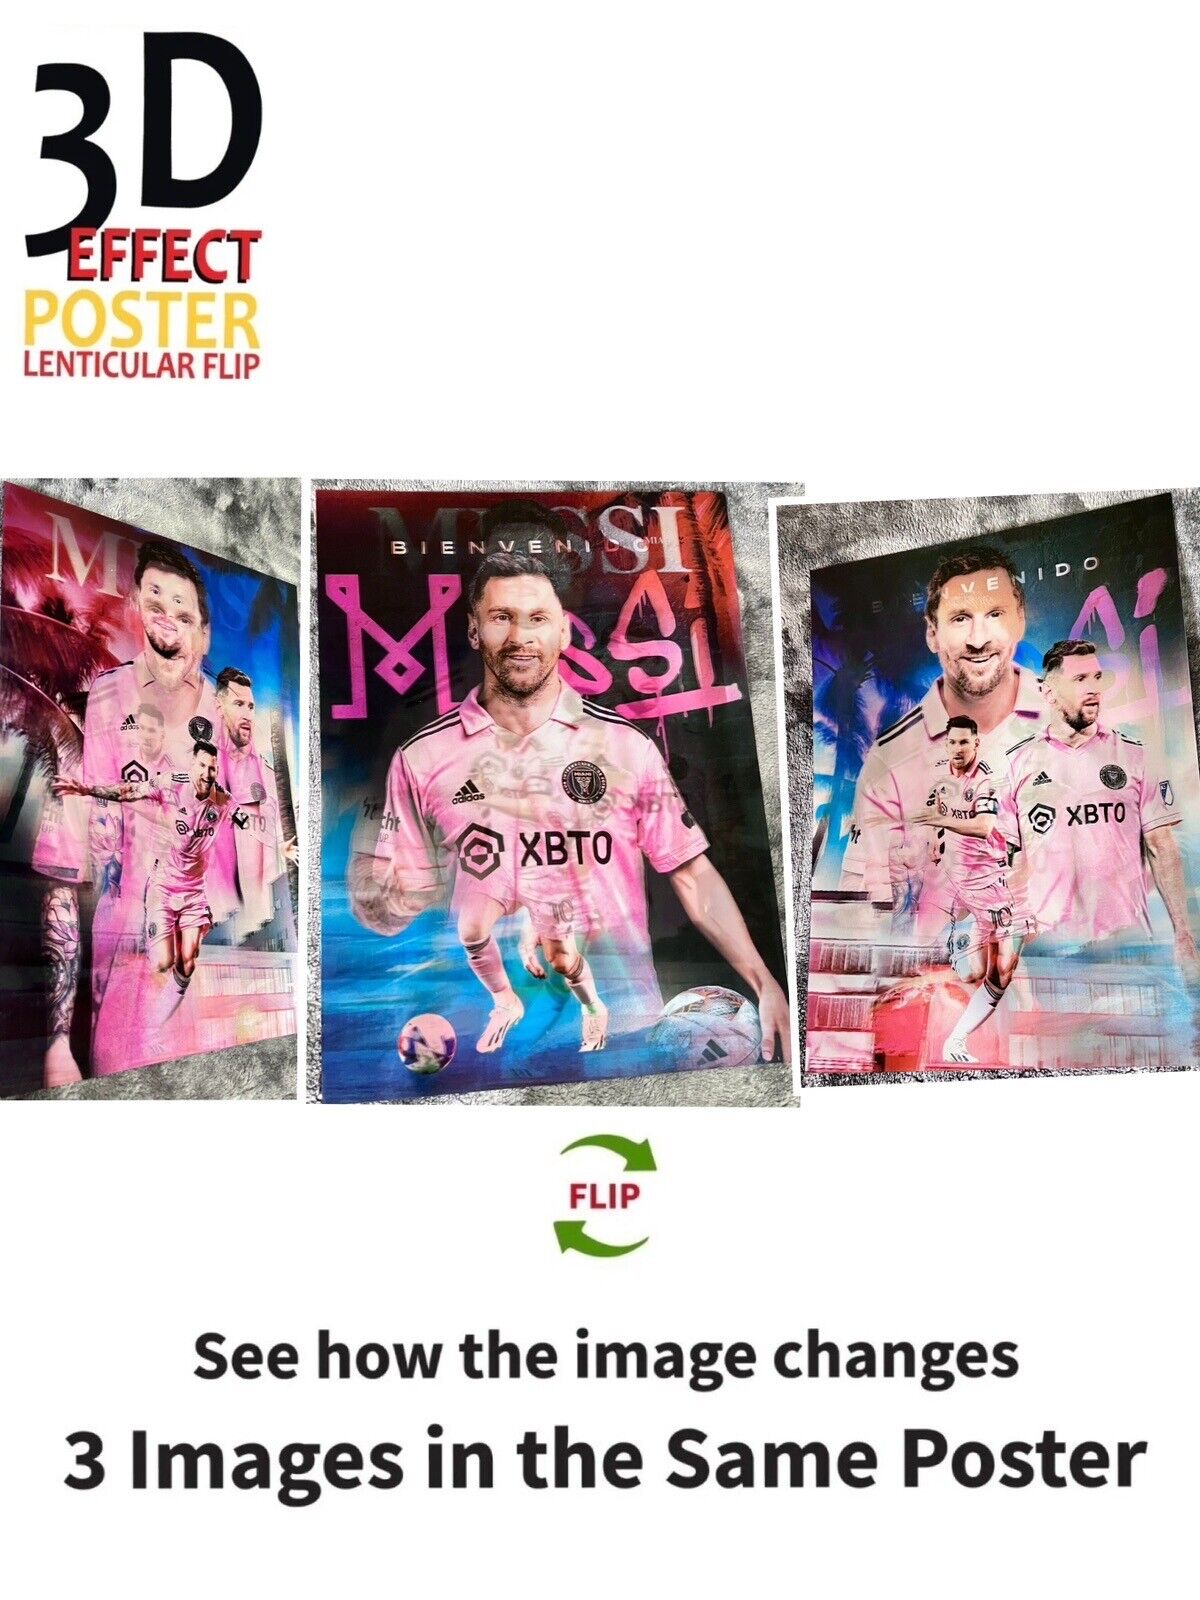 soccer superstar-Lionel Messi-3D Poster 3DLenticular Effect-3 Images In One